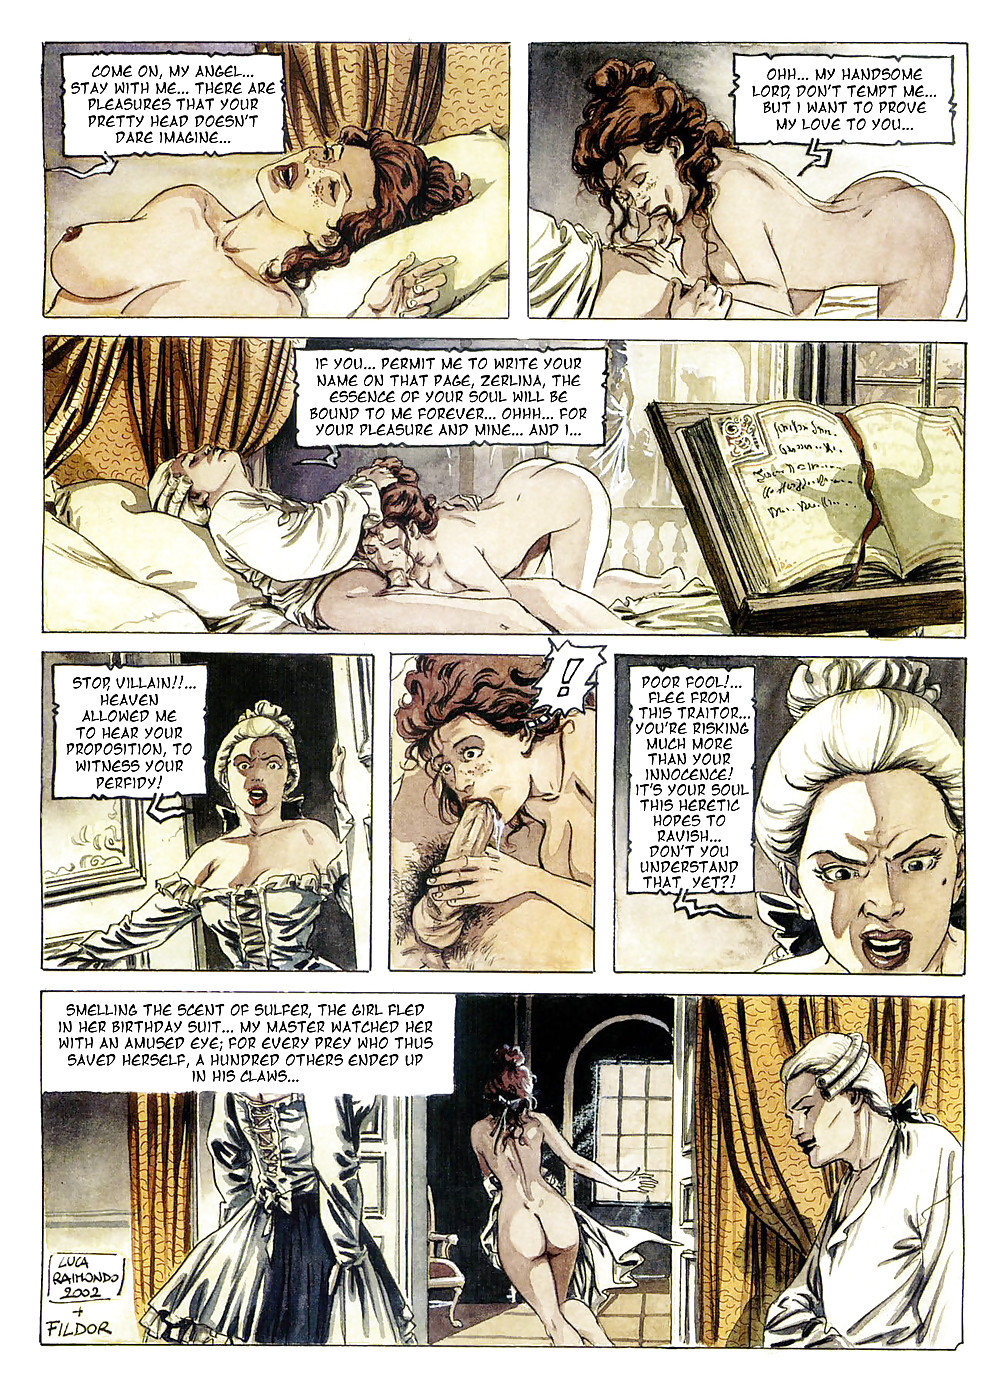 Erotic Comic Art14 -  Don Giovanni #17531411